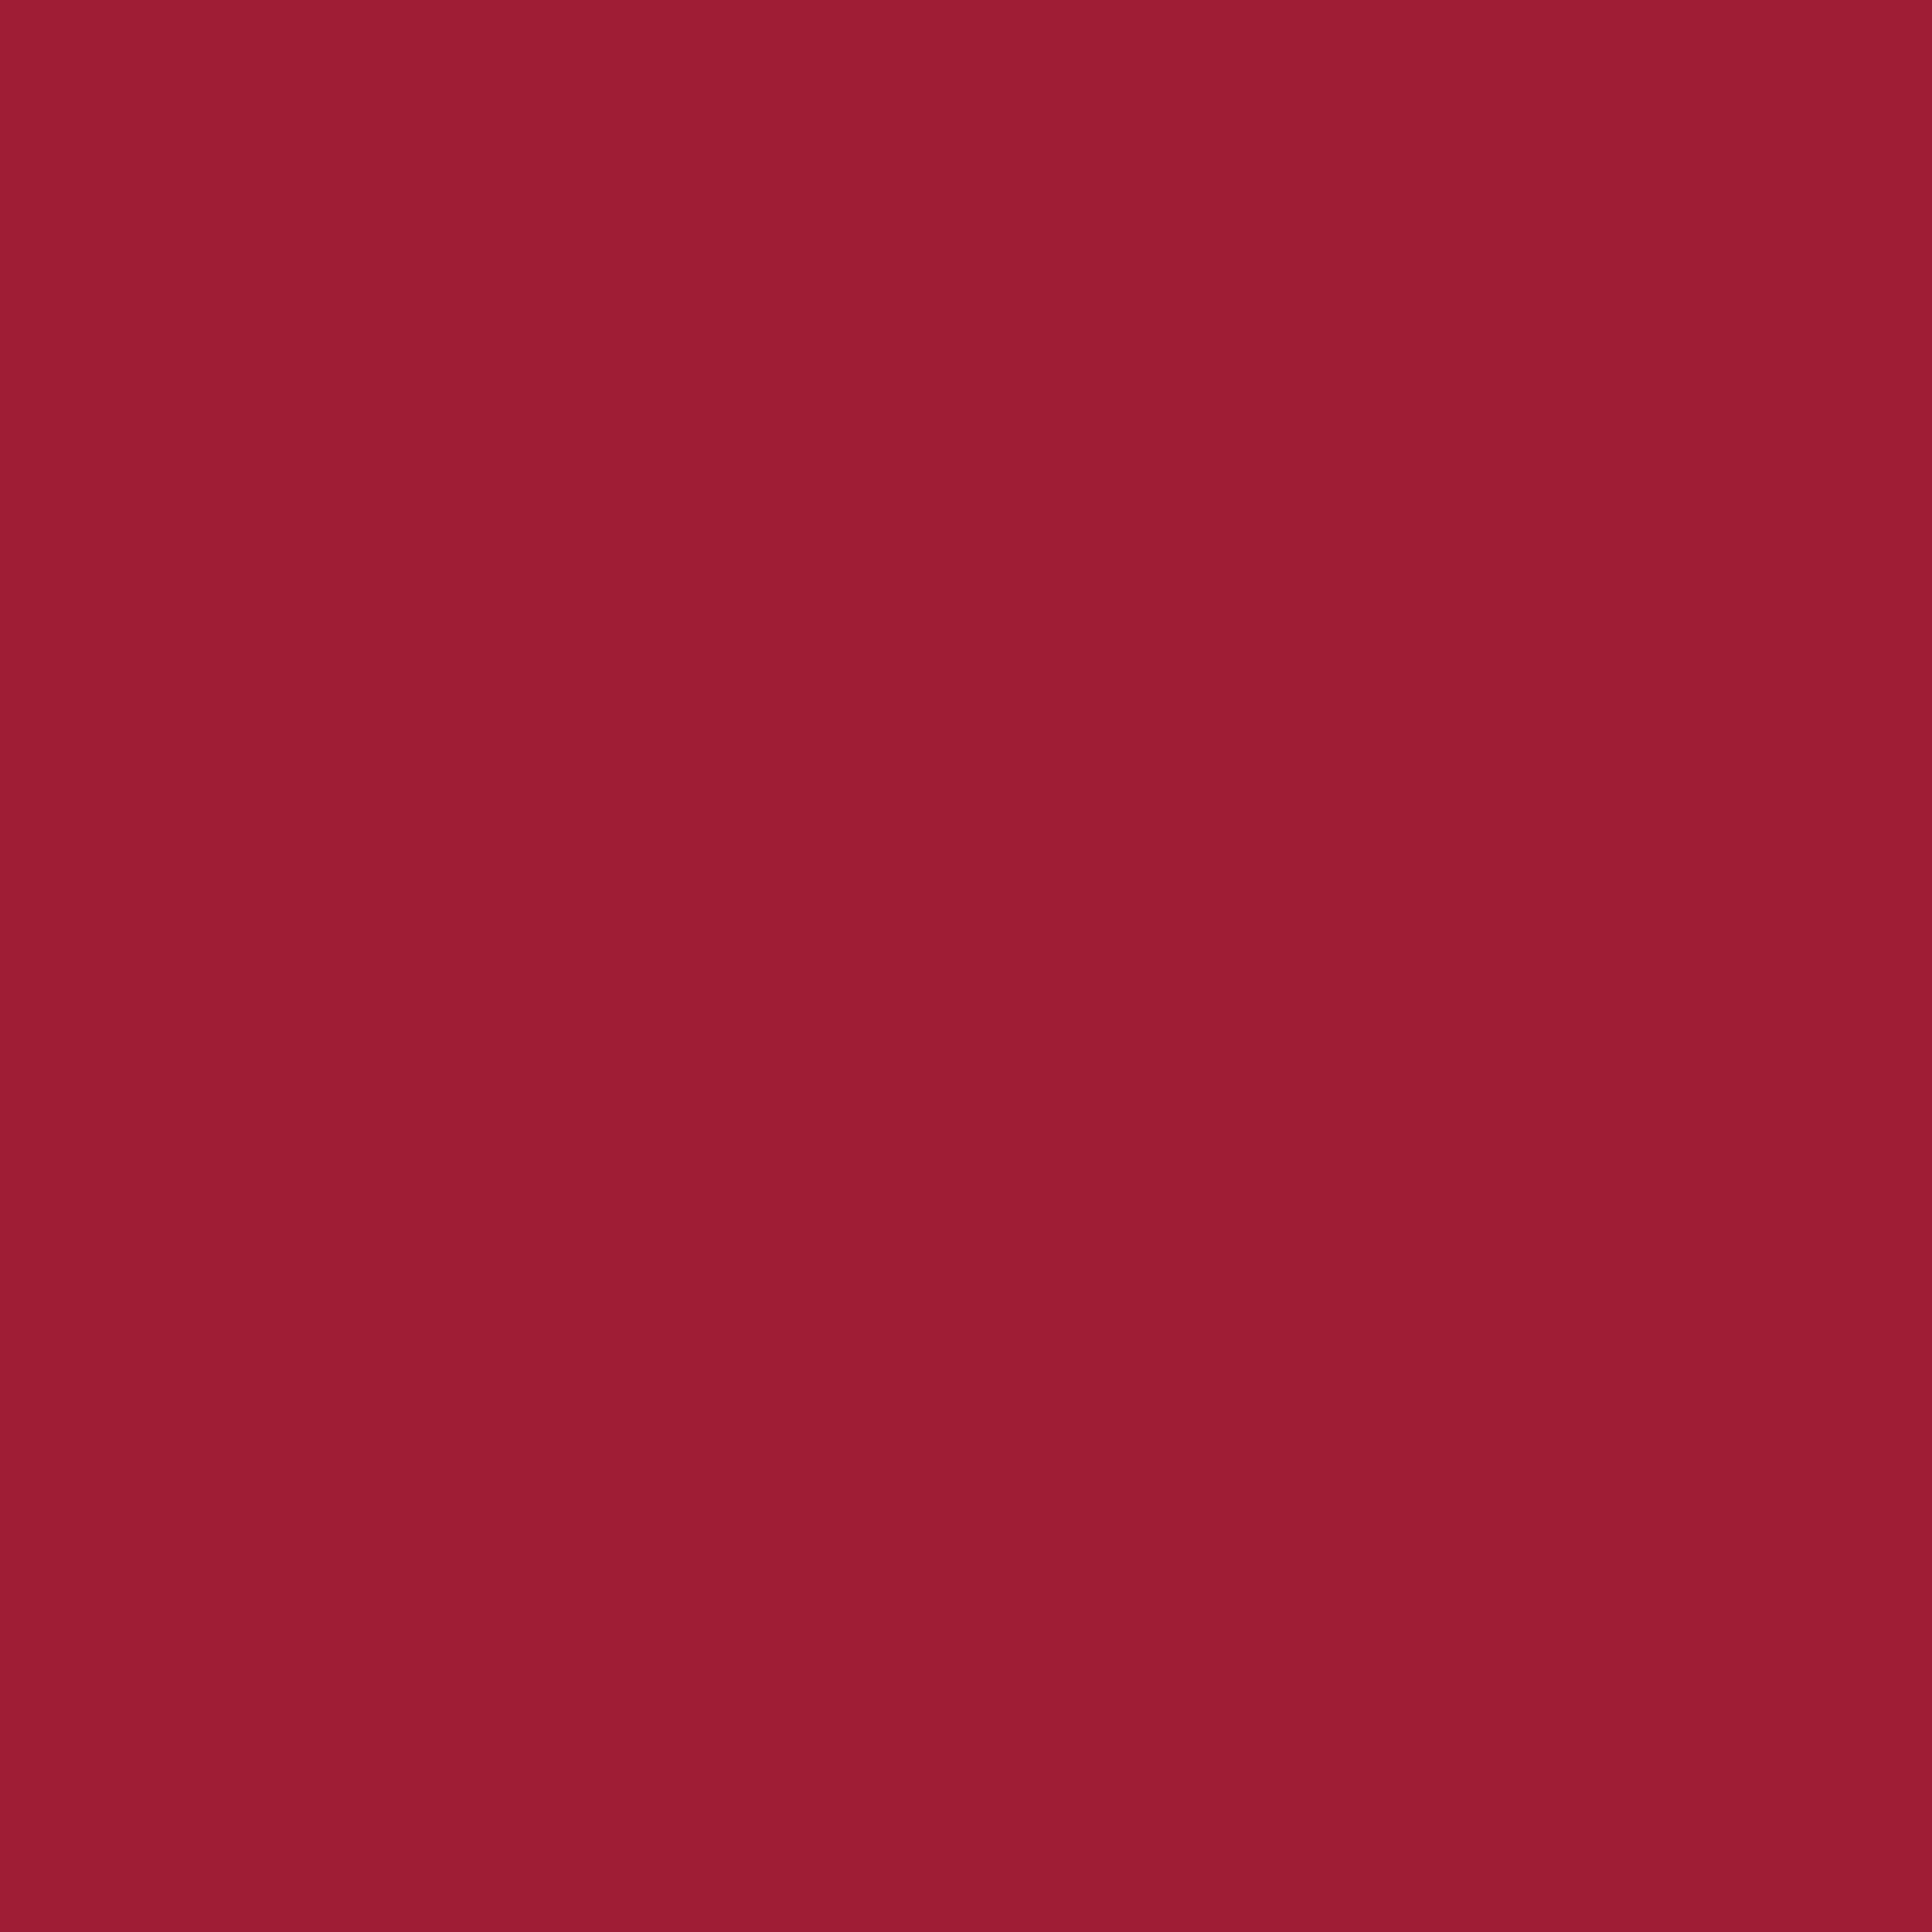 2732x2732 Vivid Burgundy Solid Color Background